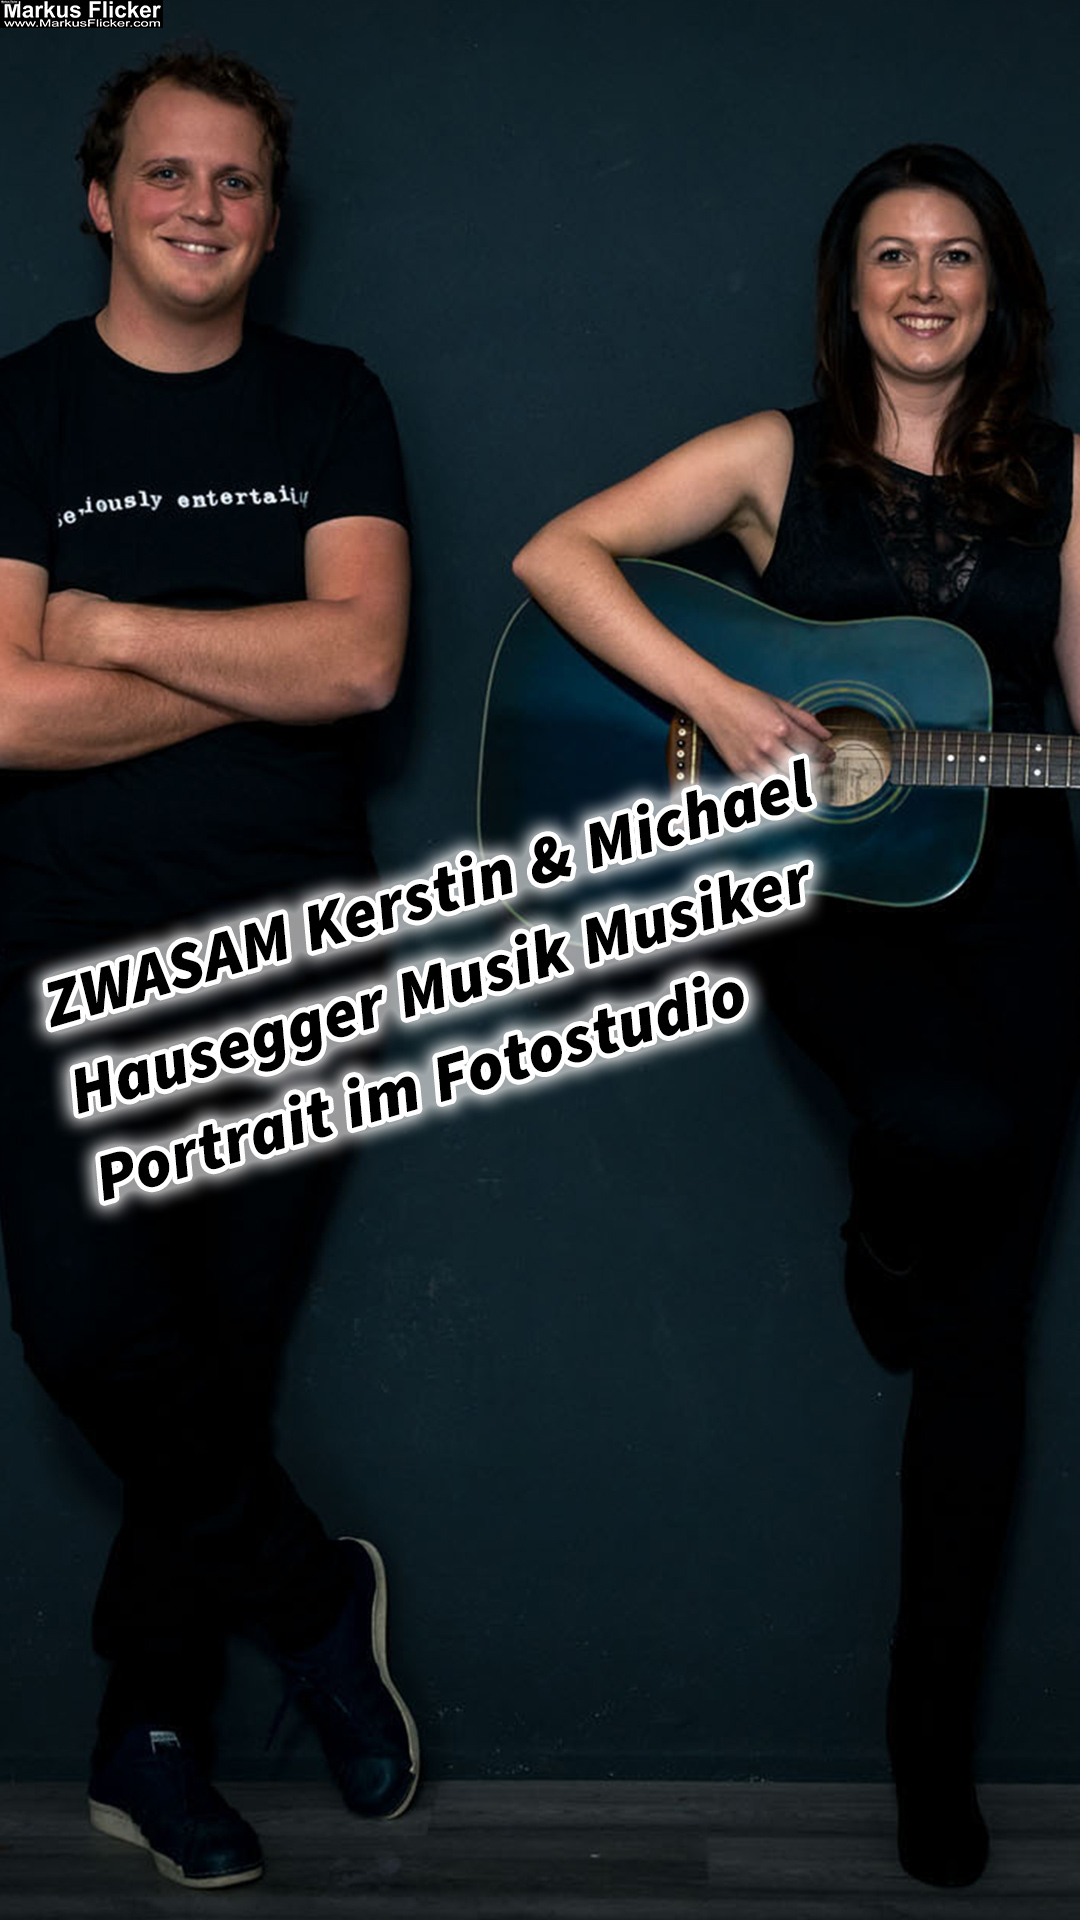 ZWASAM Kerstin & Michael Hausegger Musik Musiker Portrait im Fotostudio